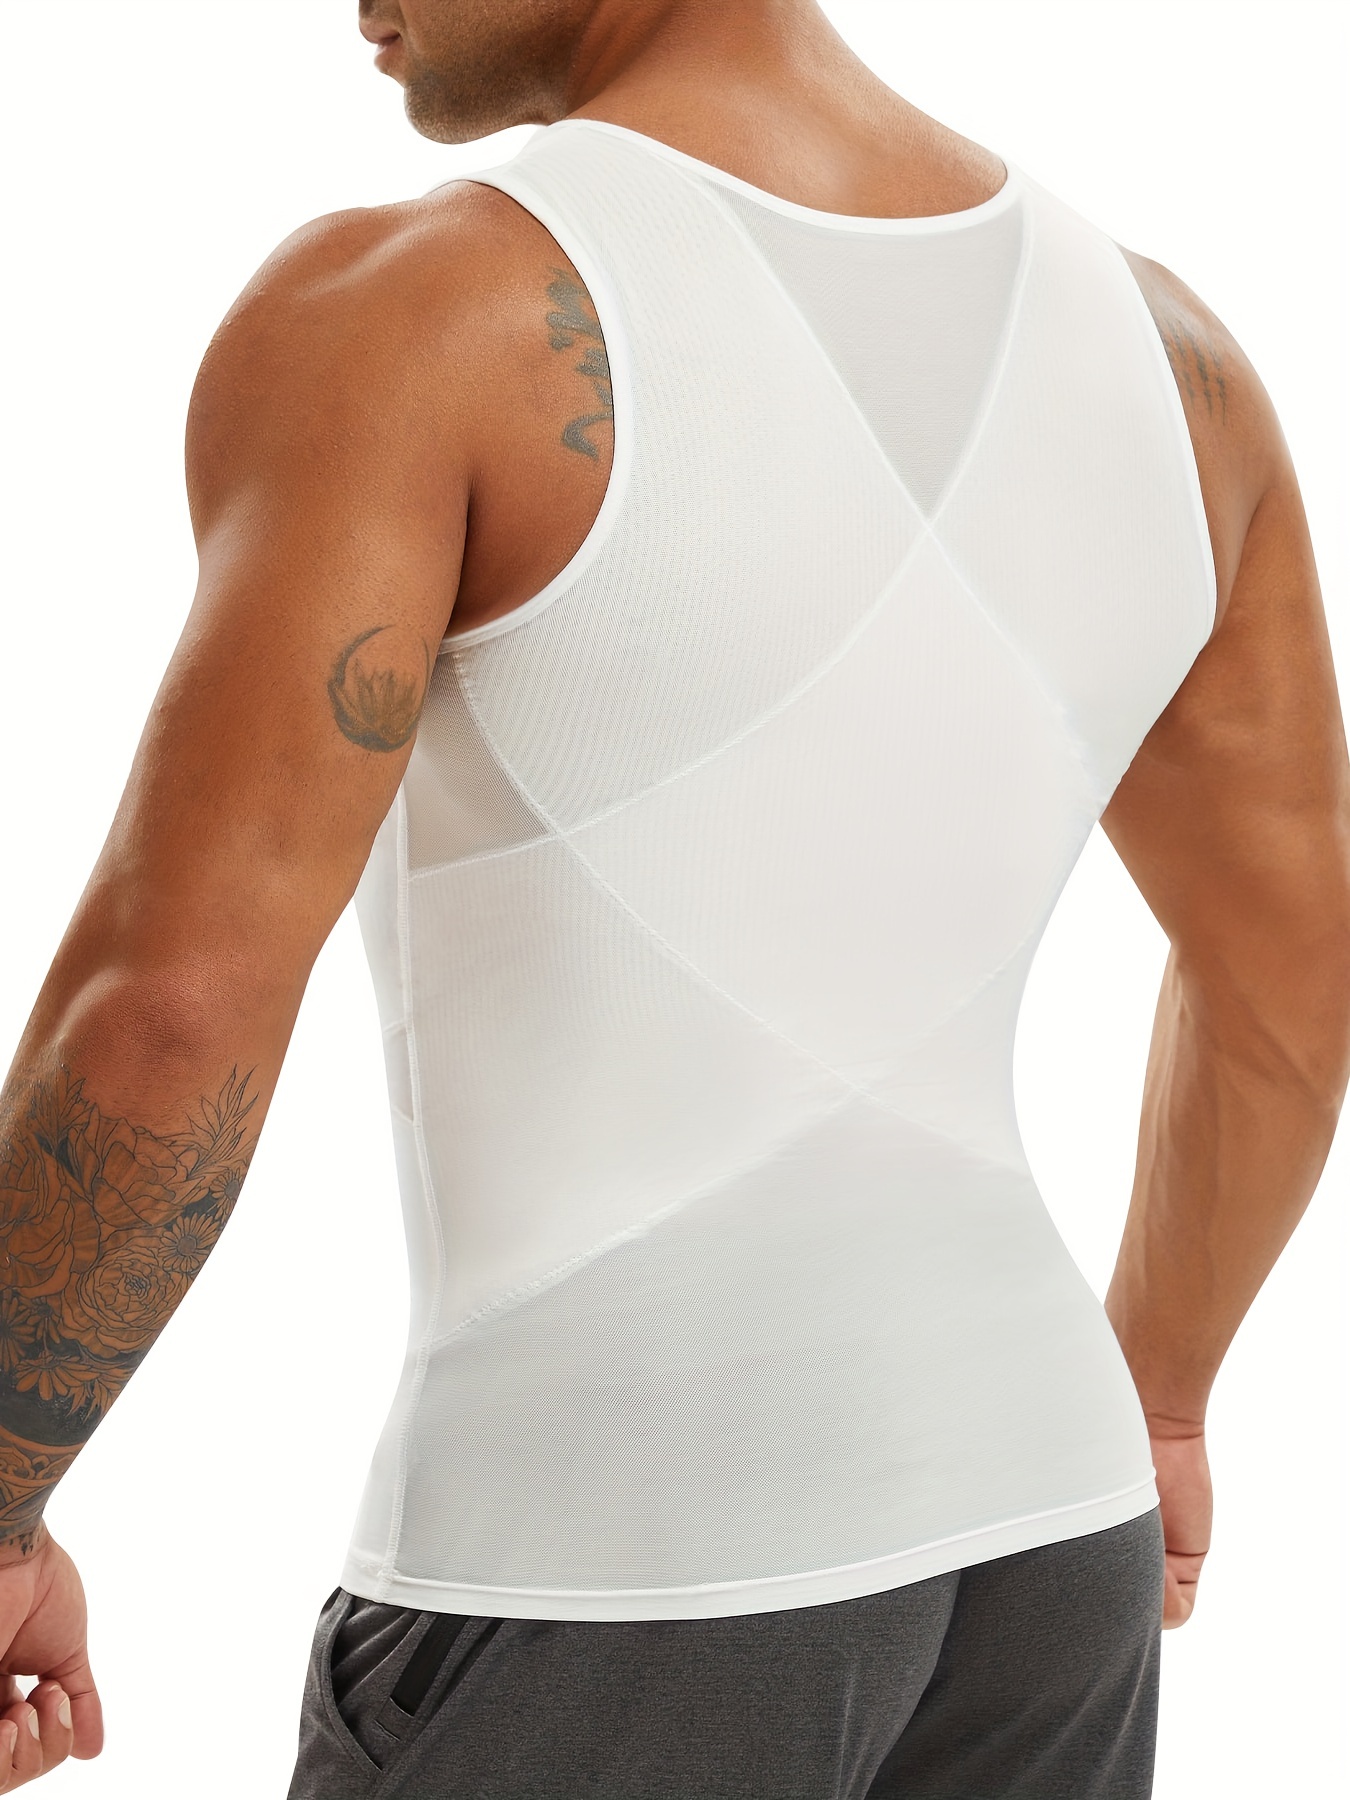 Slimming Tank Top Mens Body Shaper Compression Vest Singlet Black White - 1  Black + 1 White